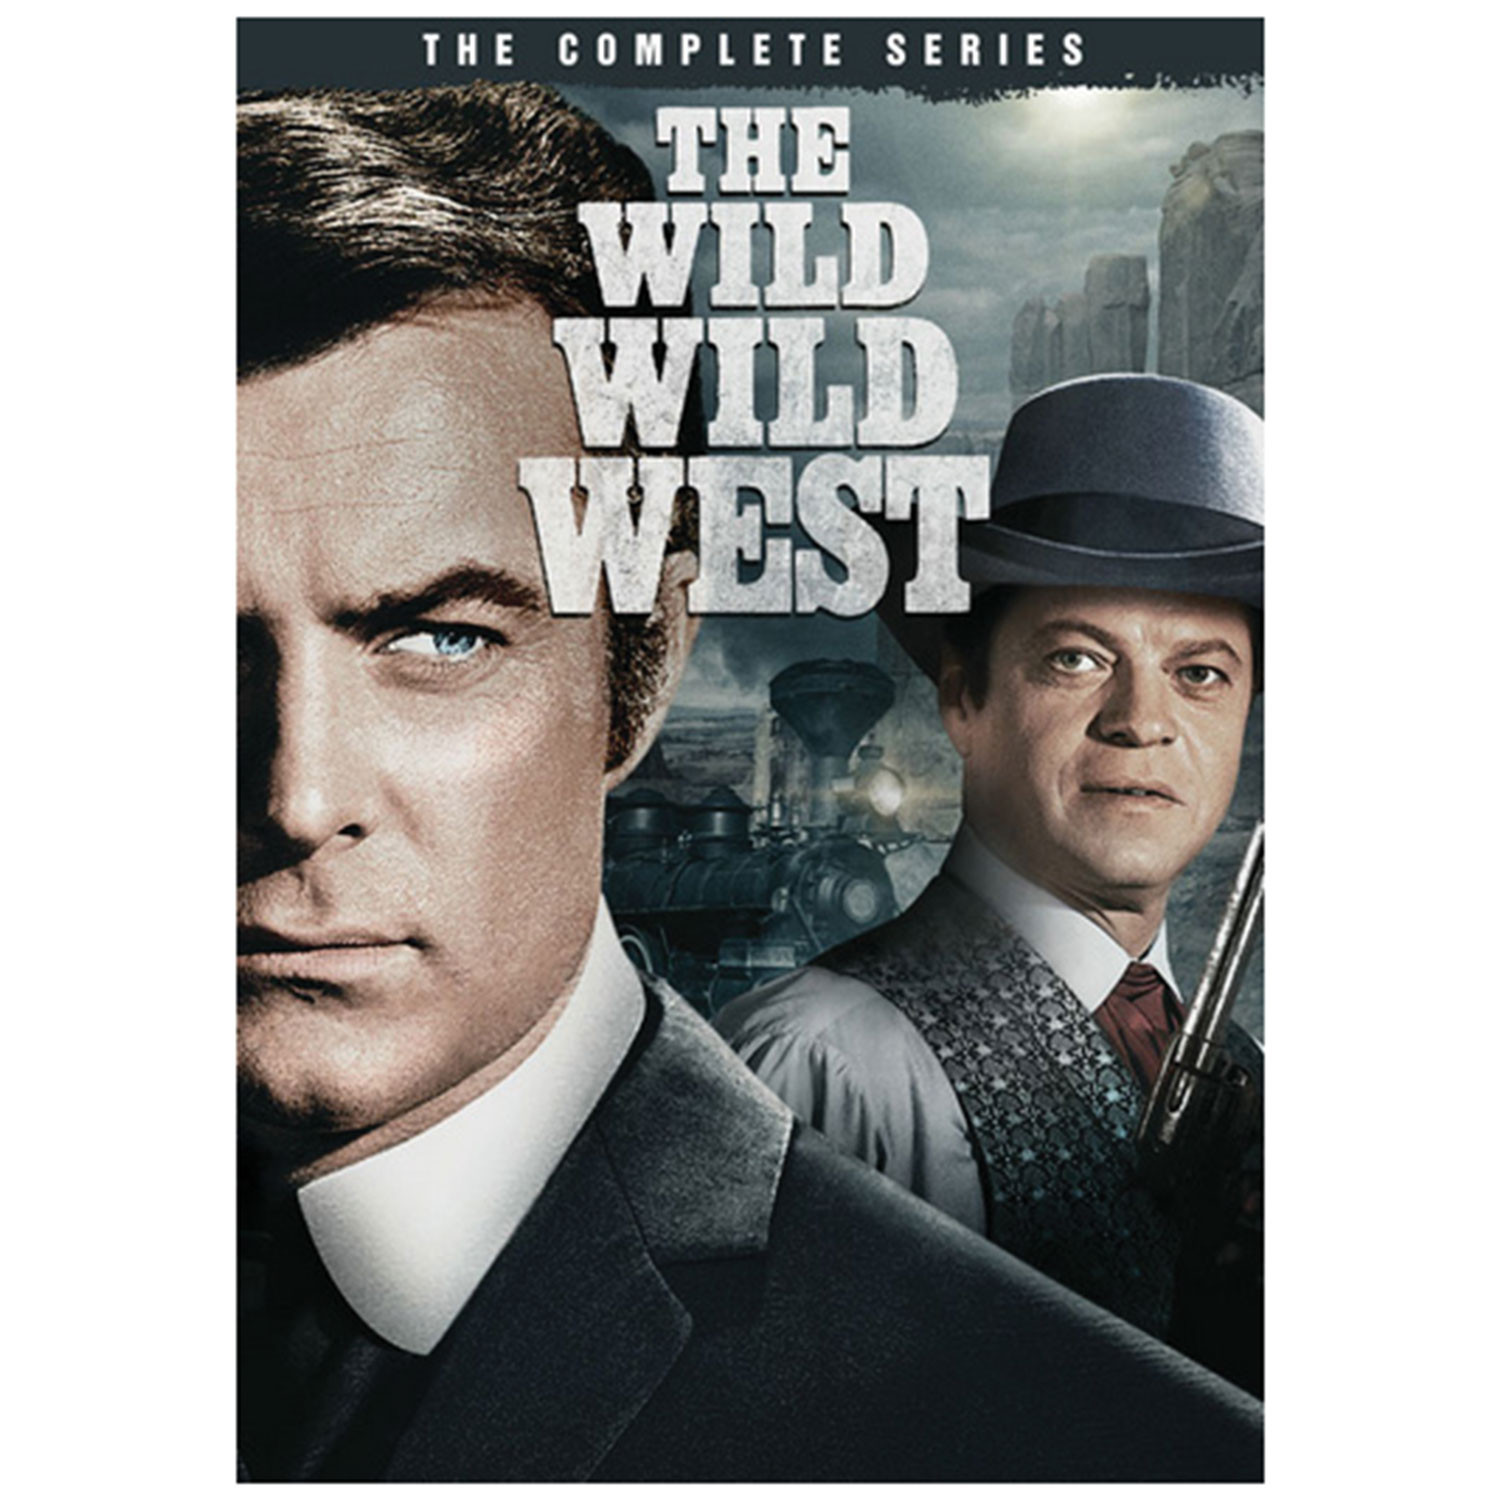 The Wild Wild West: Complete Series - DVD Set - Region 1 Coded (US